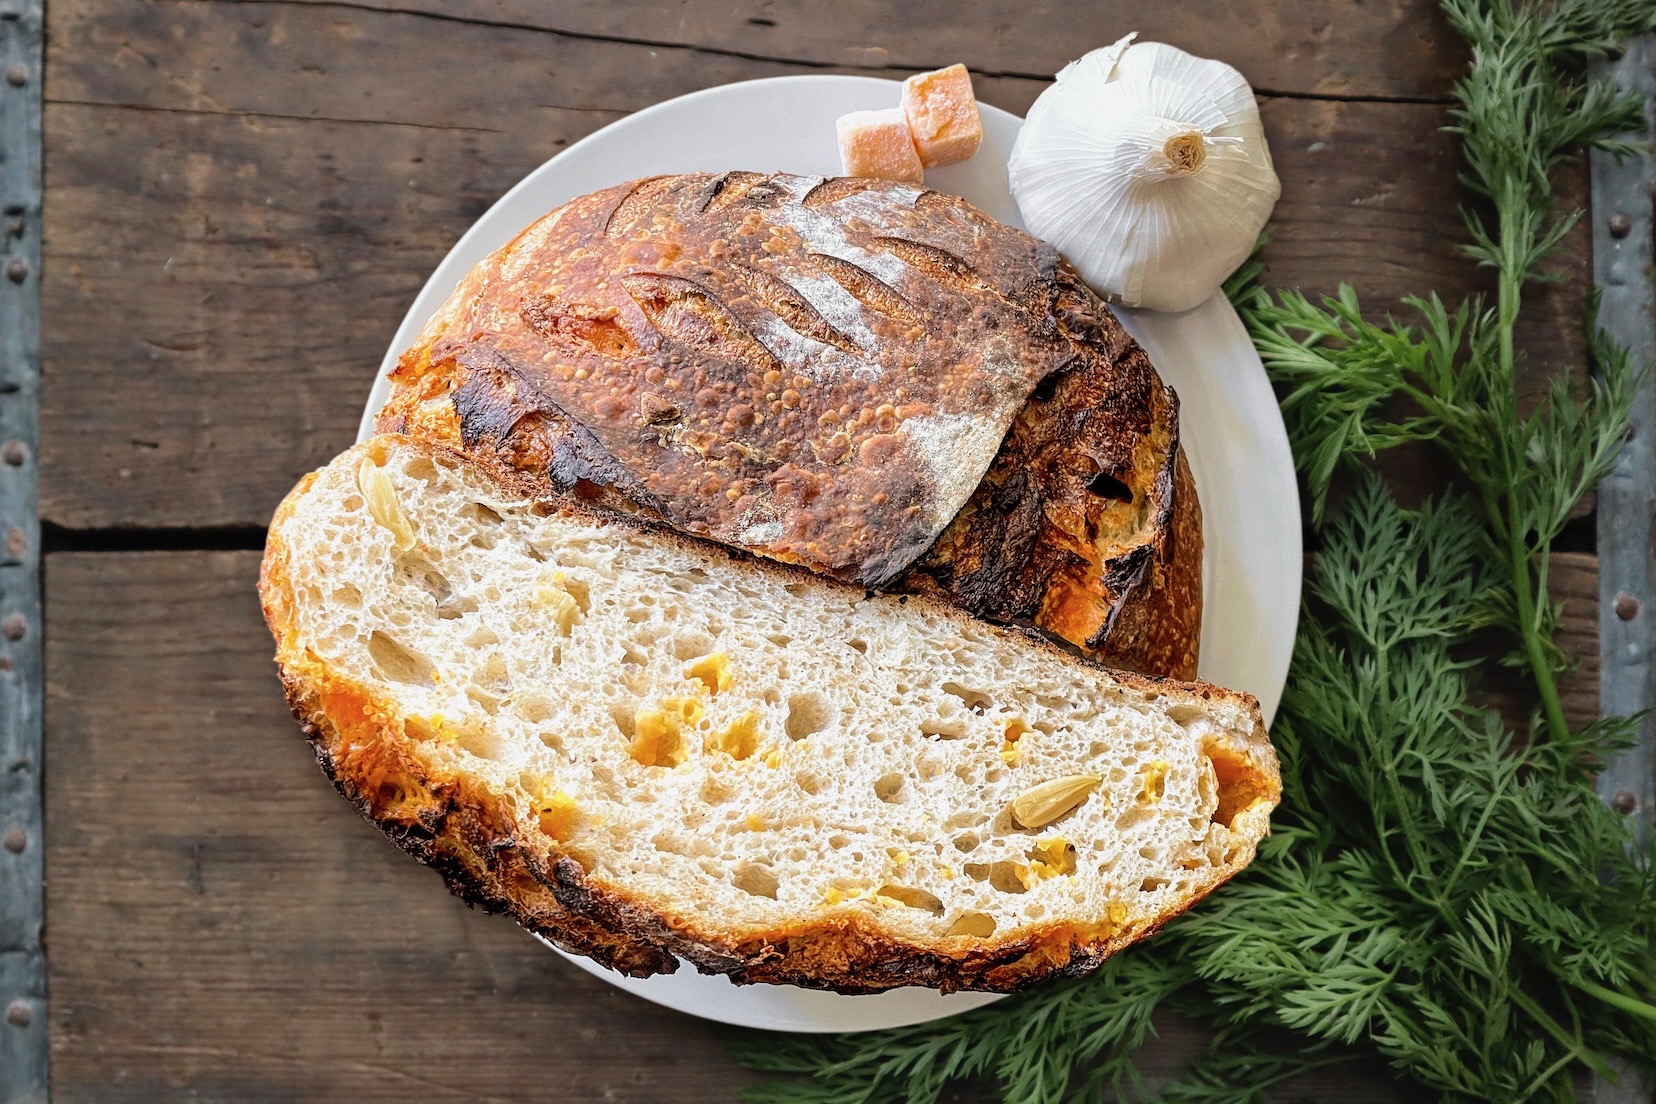 Shef Joan's homemade sourdough bread